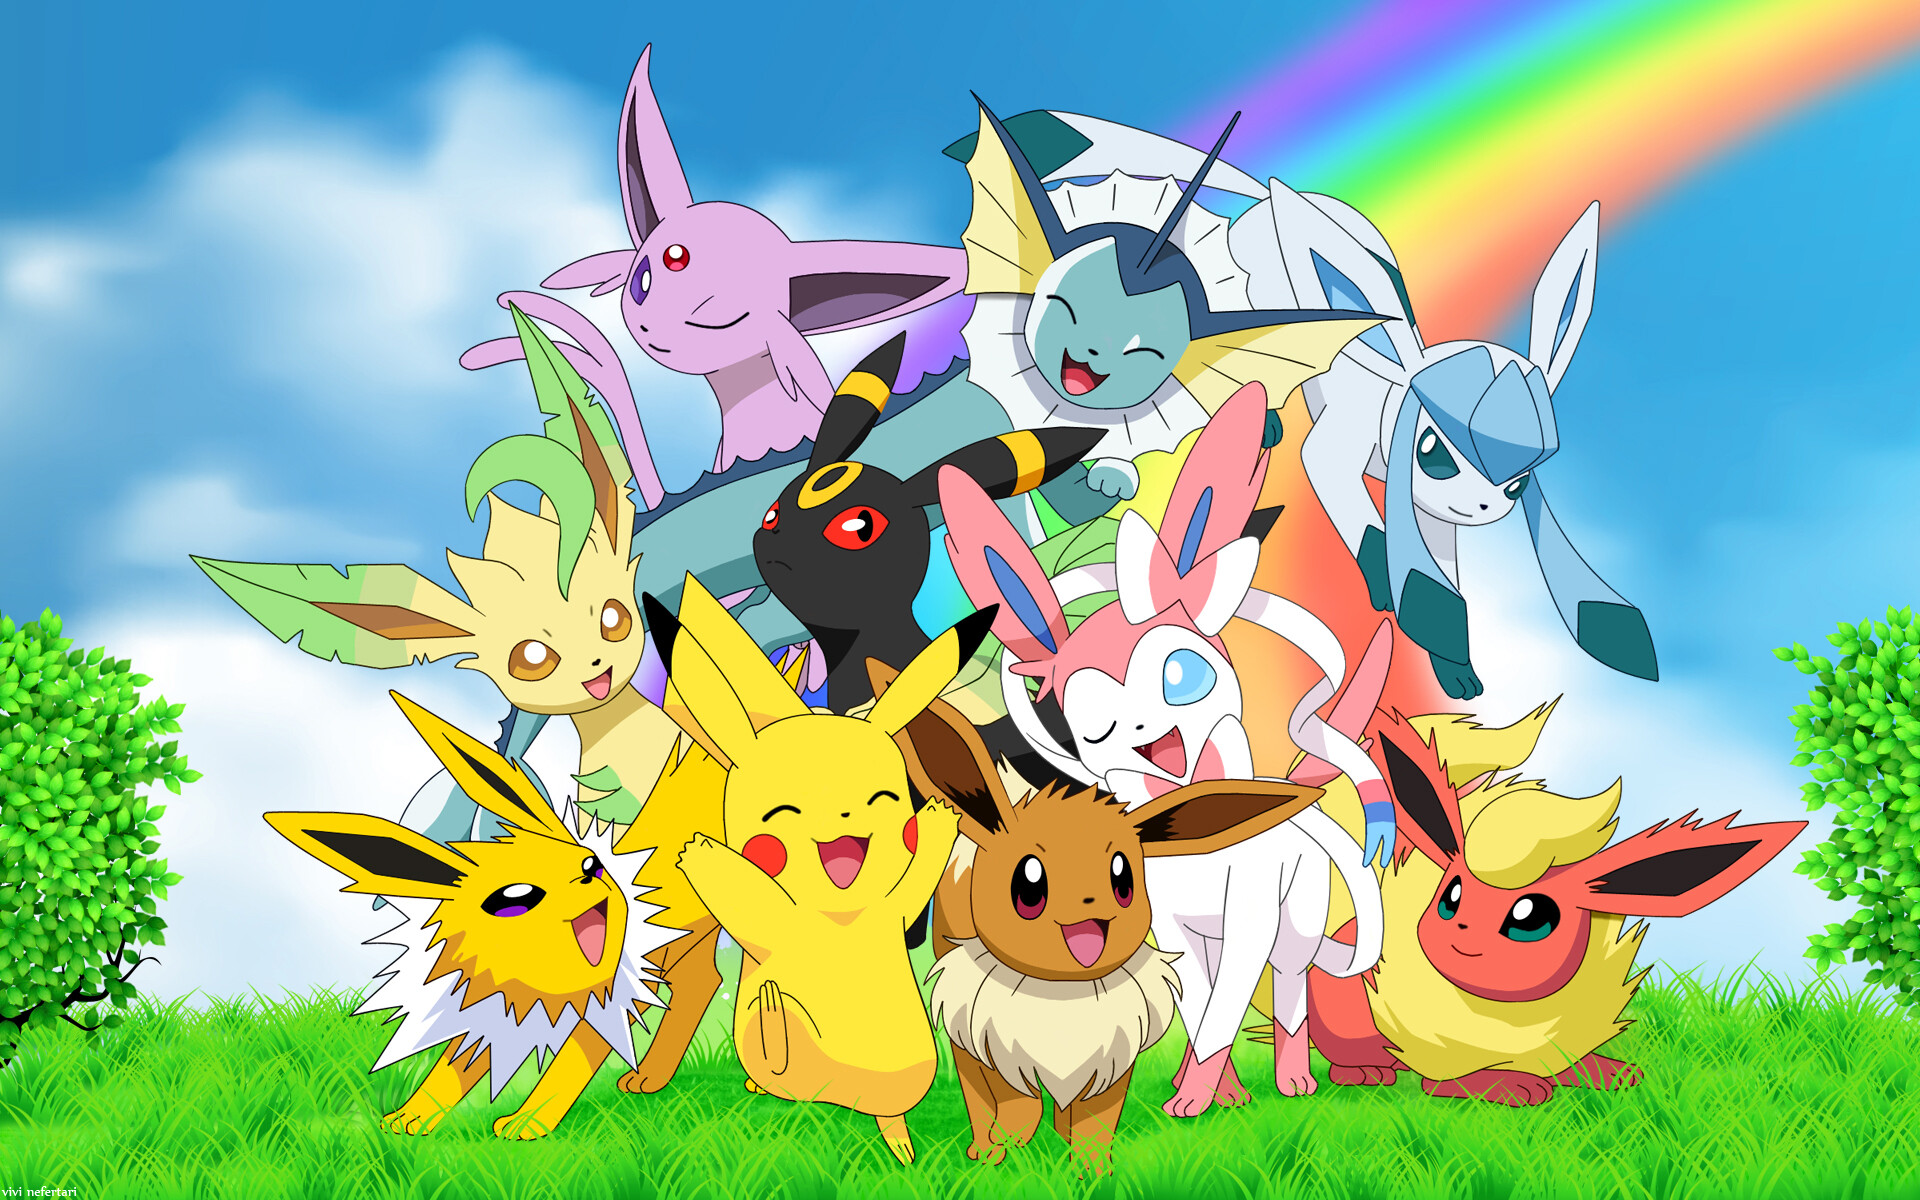 Glaceon: At the end of the rainbow, Variety of Pokemon, Sylveon, Vaporeon, Jolteon, Flareon, Umbreon, Leafeon, Pikachu. 1920x1200 HD Wallpaper.